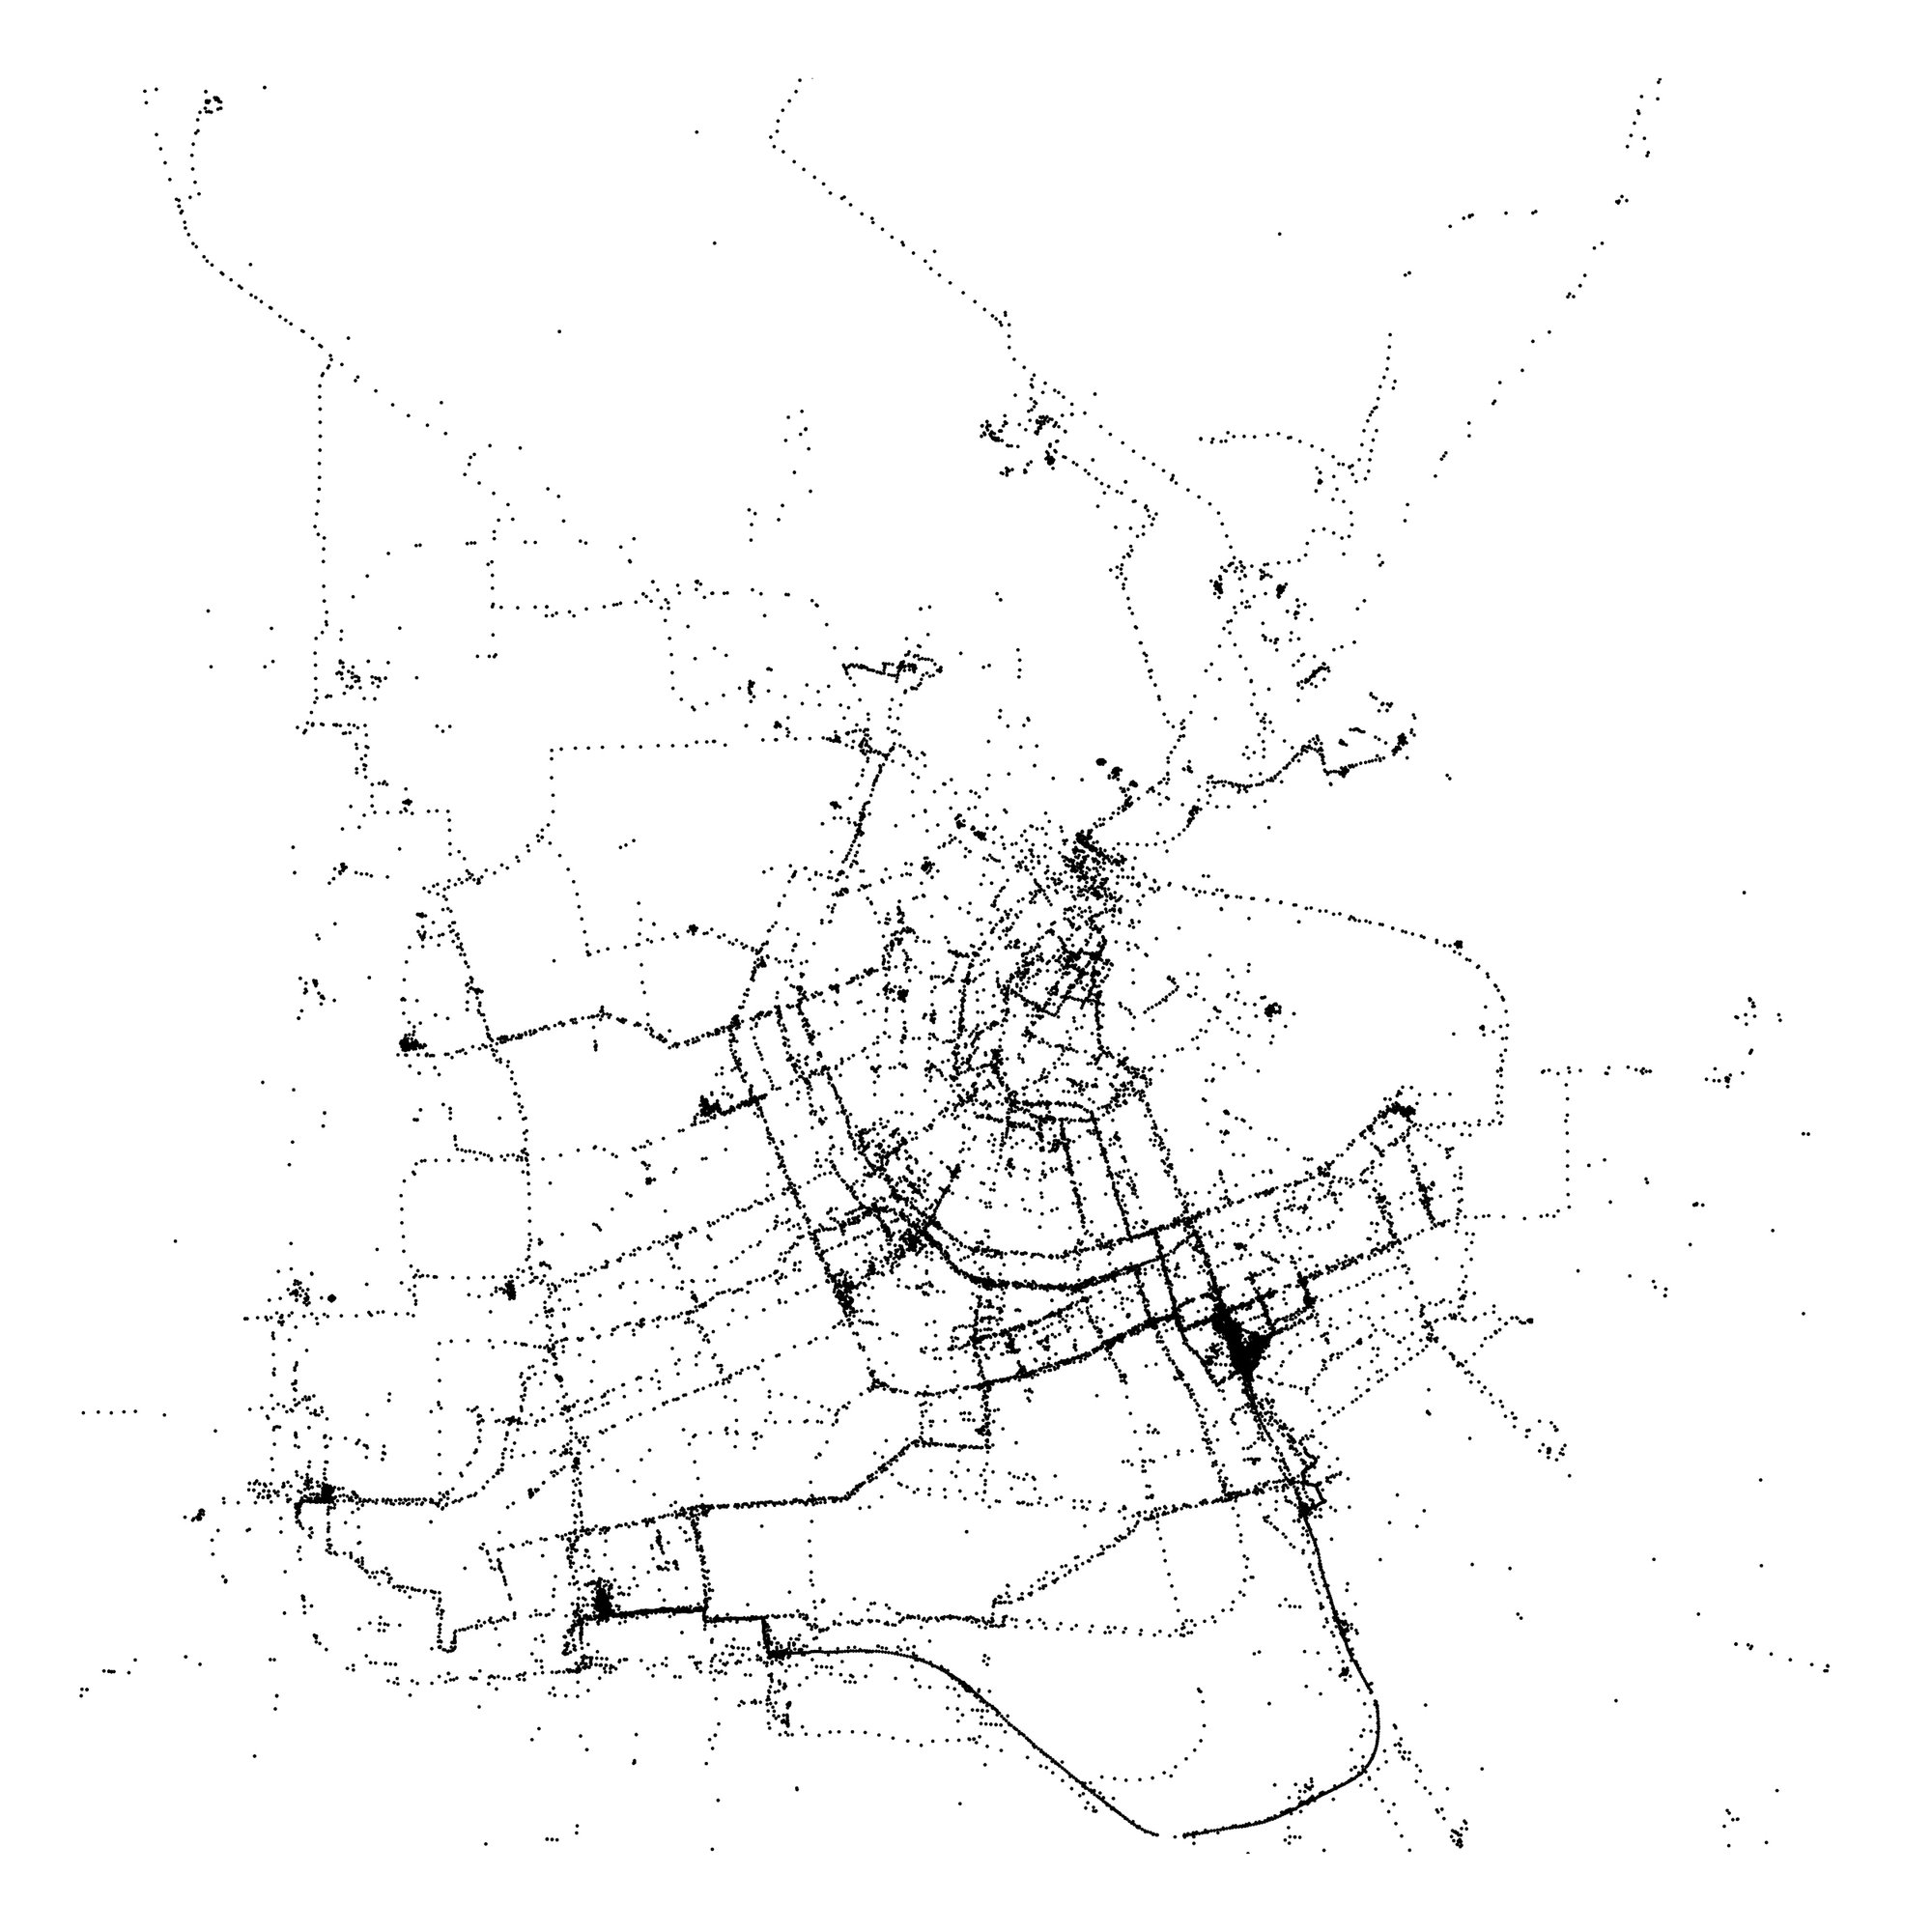 Amsterdam plot map created in Python